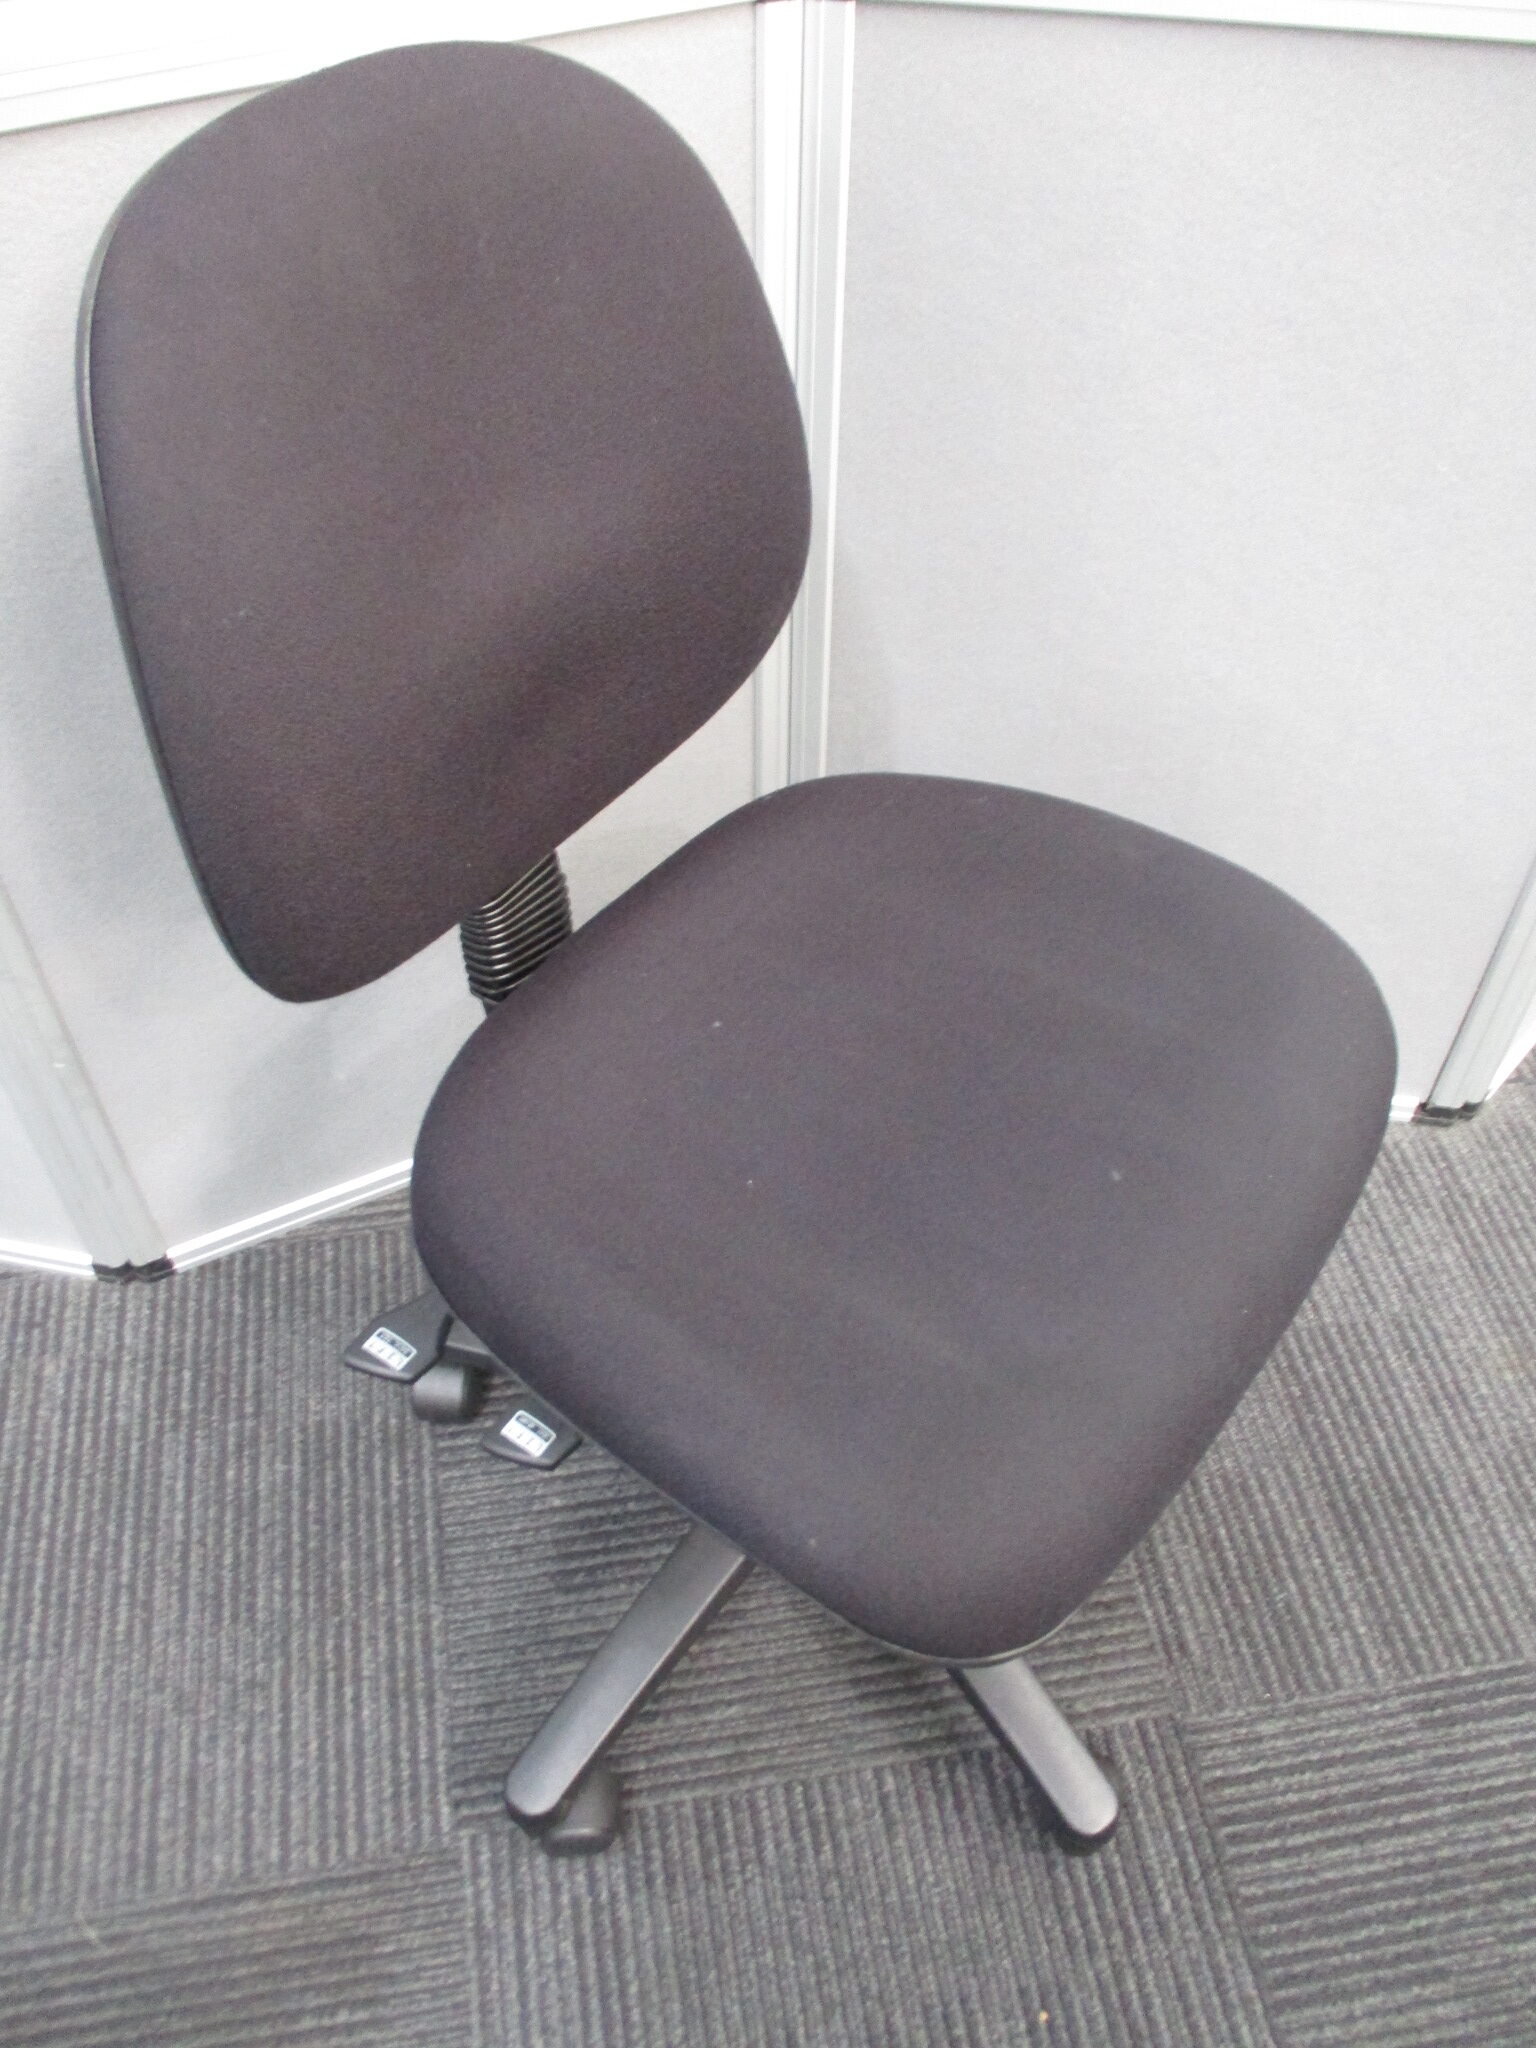 Black Ergonomic Office Chairs $120